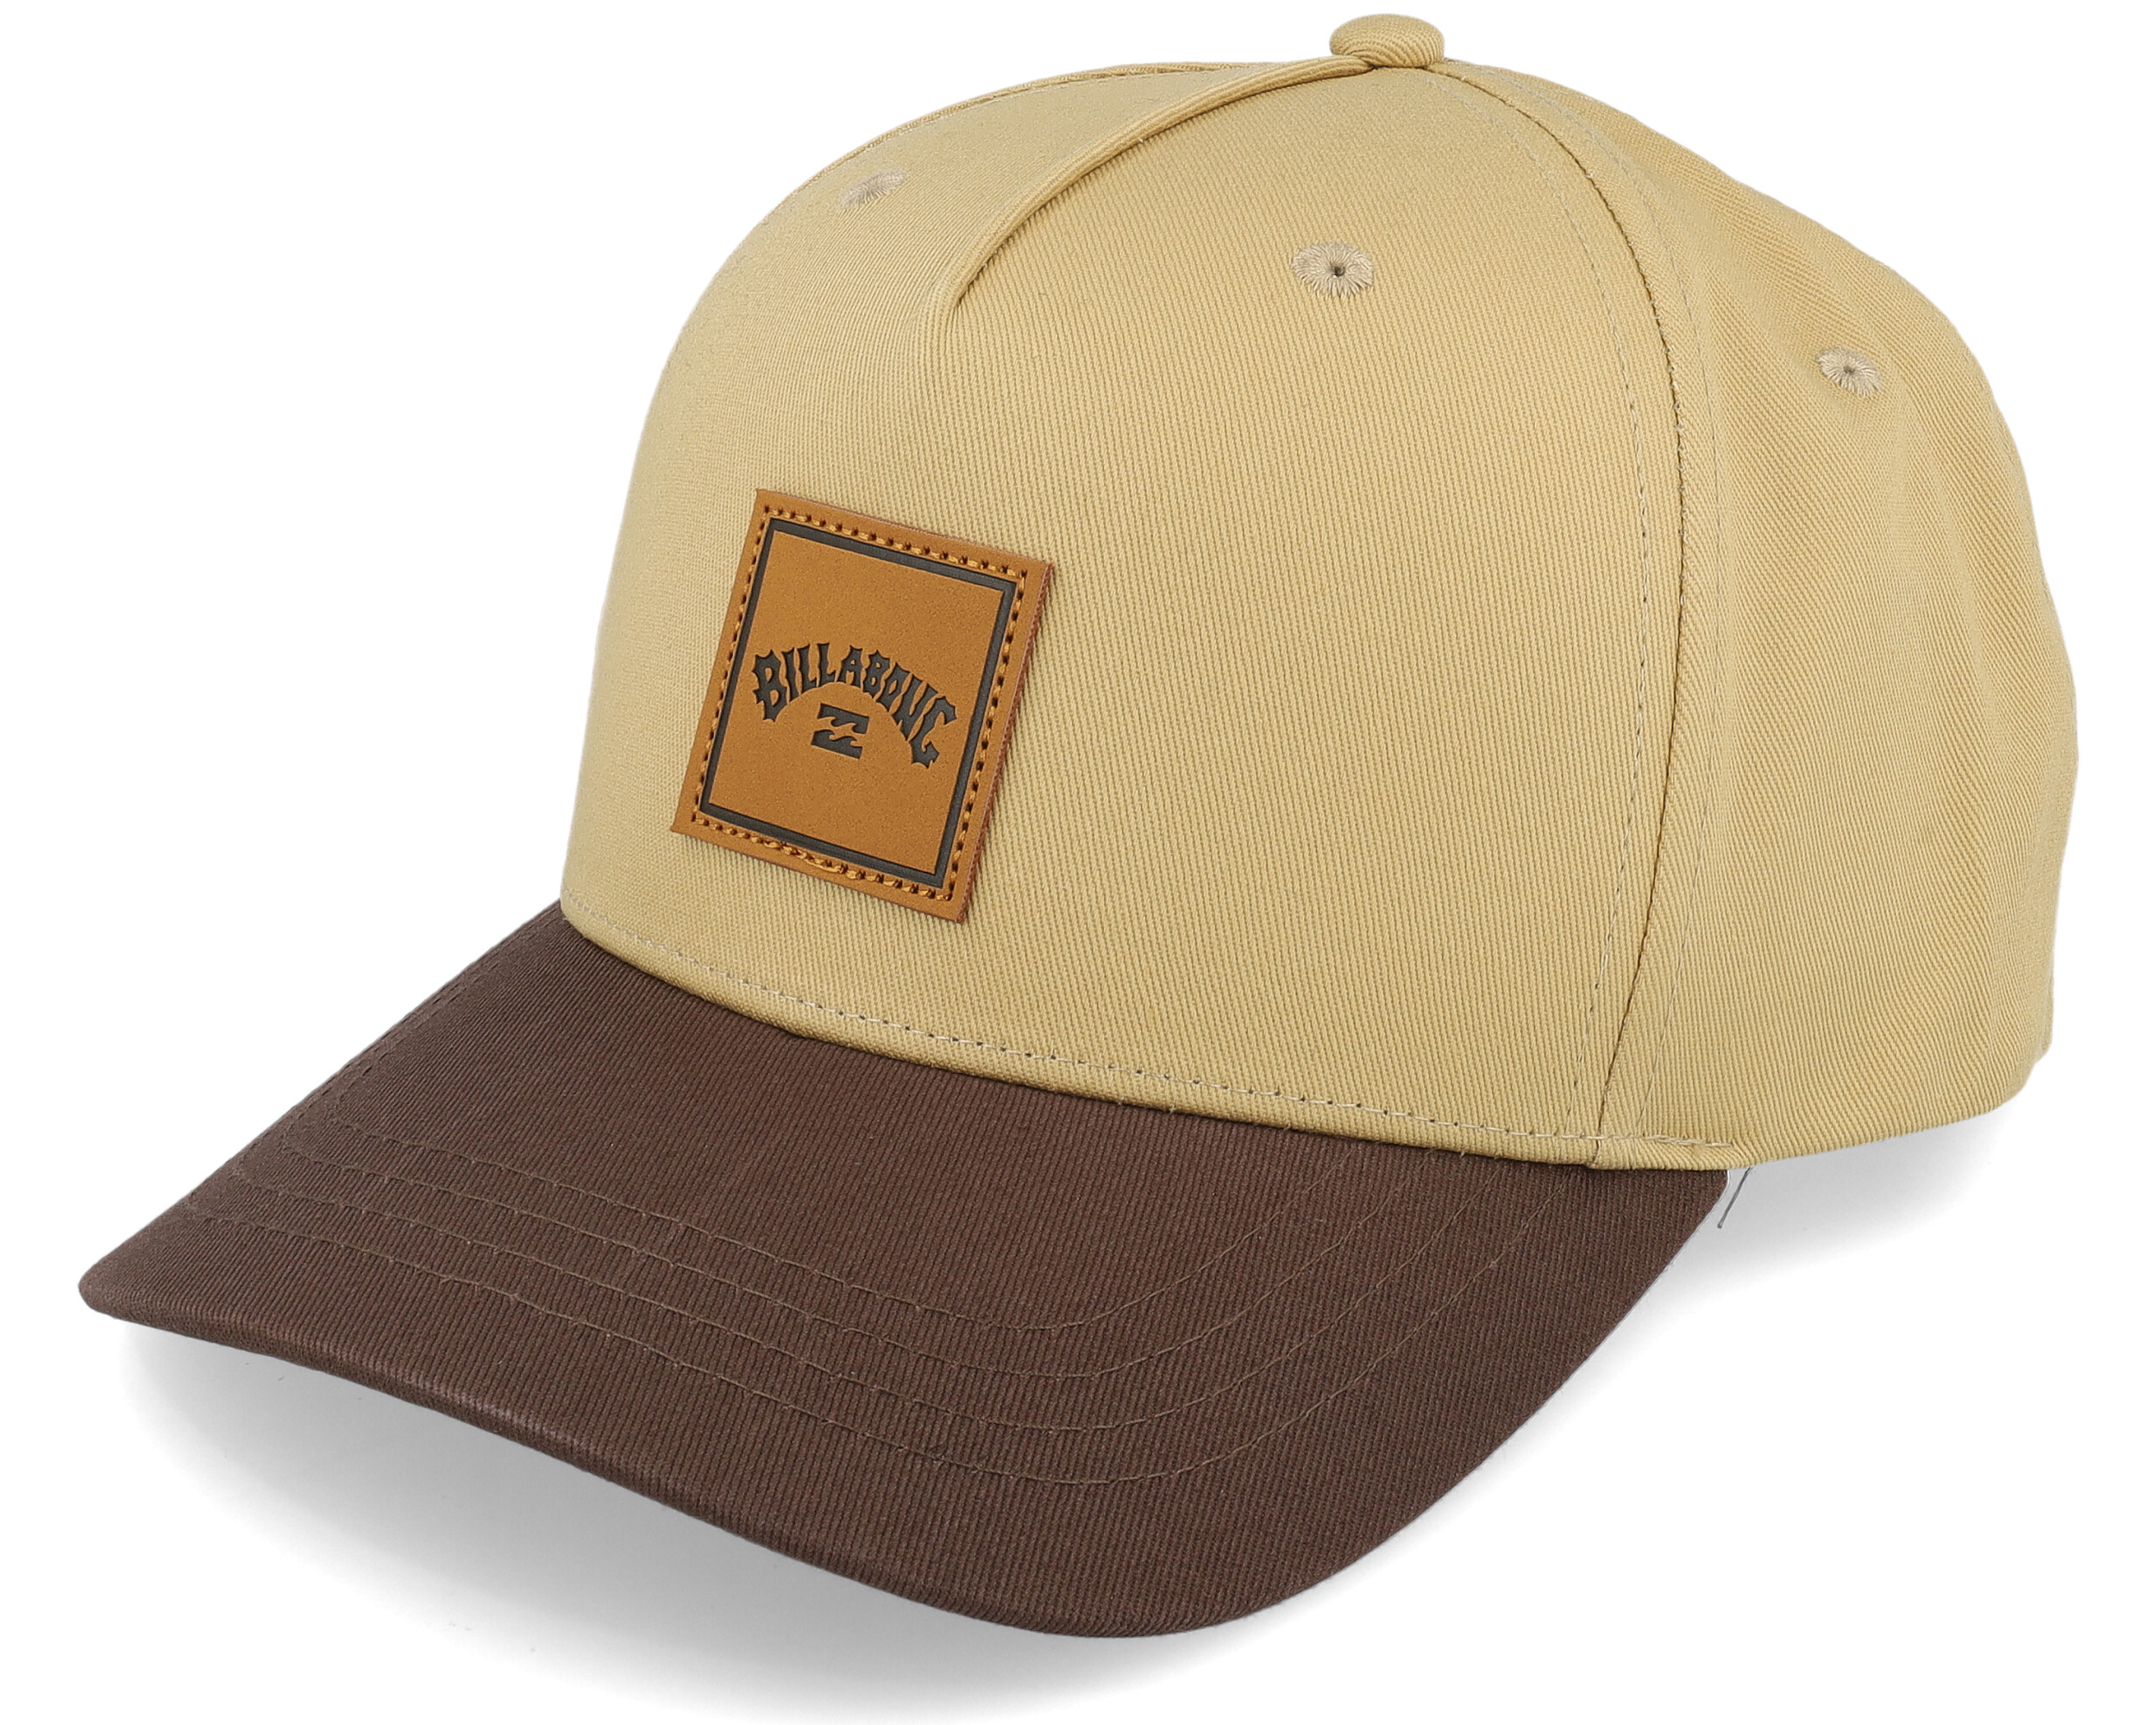 Billabong Stacked Gold/Brown Adjustable cap -